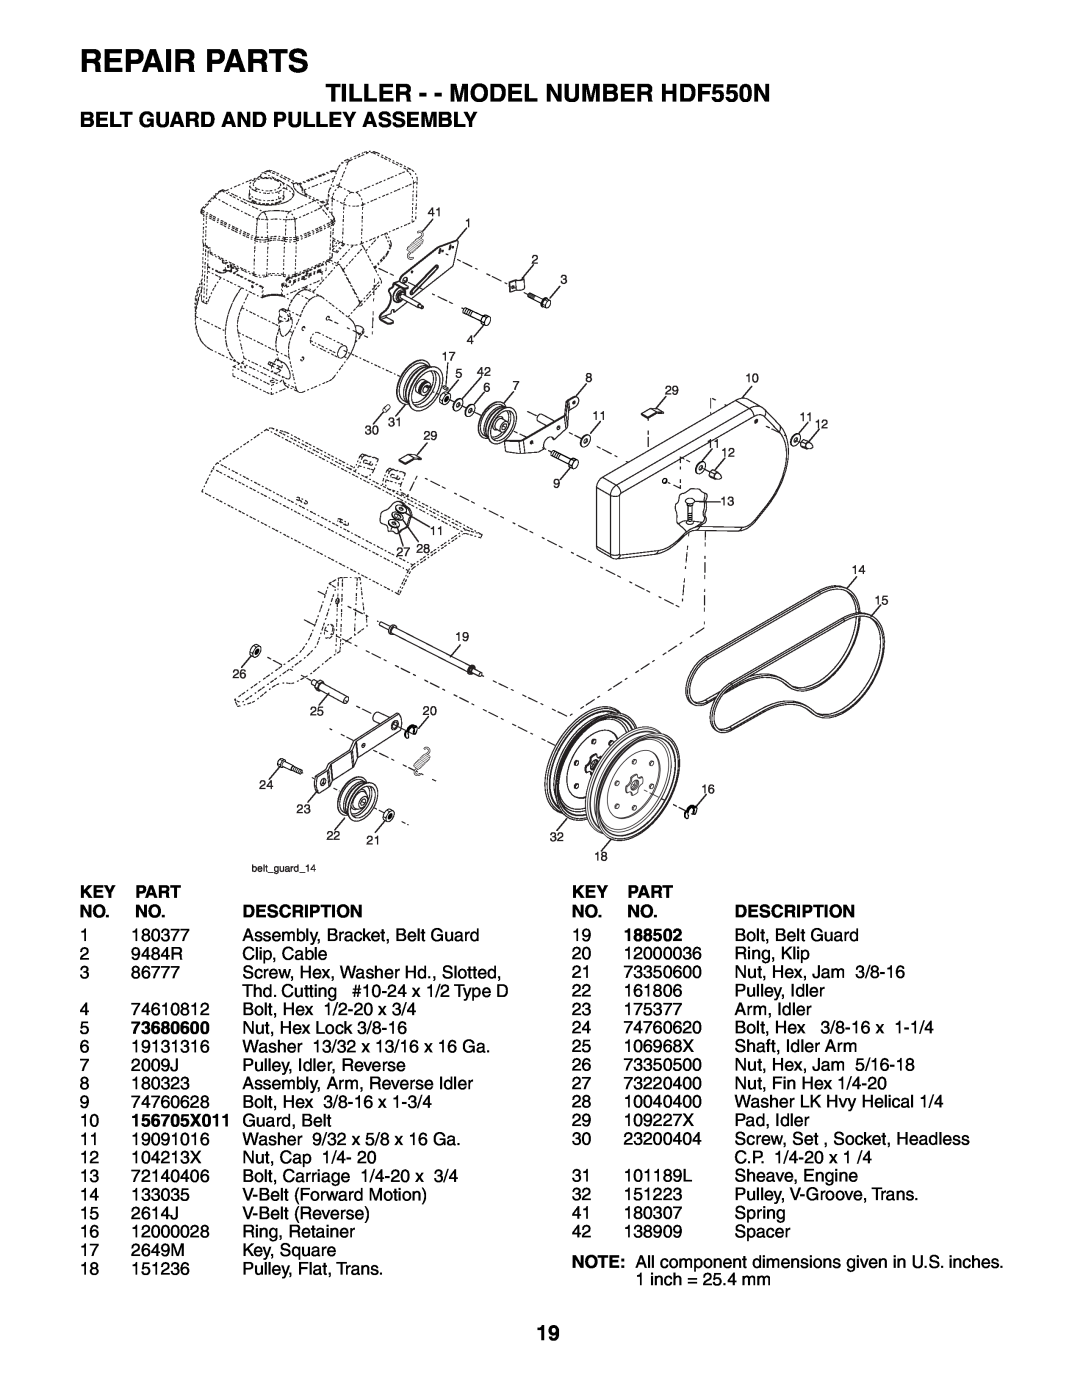 Poulan Belt Guard And Pulley Assembly, Repair Parts, TILLER - - MODEL NUMBER HDF550N, Description, 188502, 73680600 